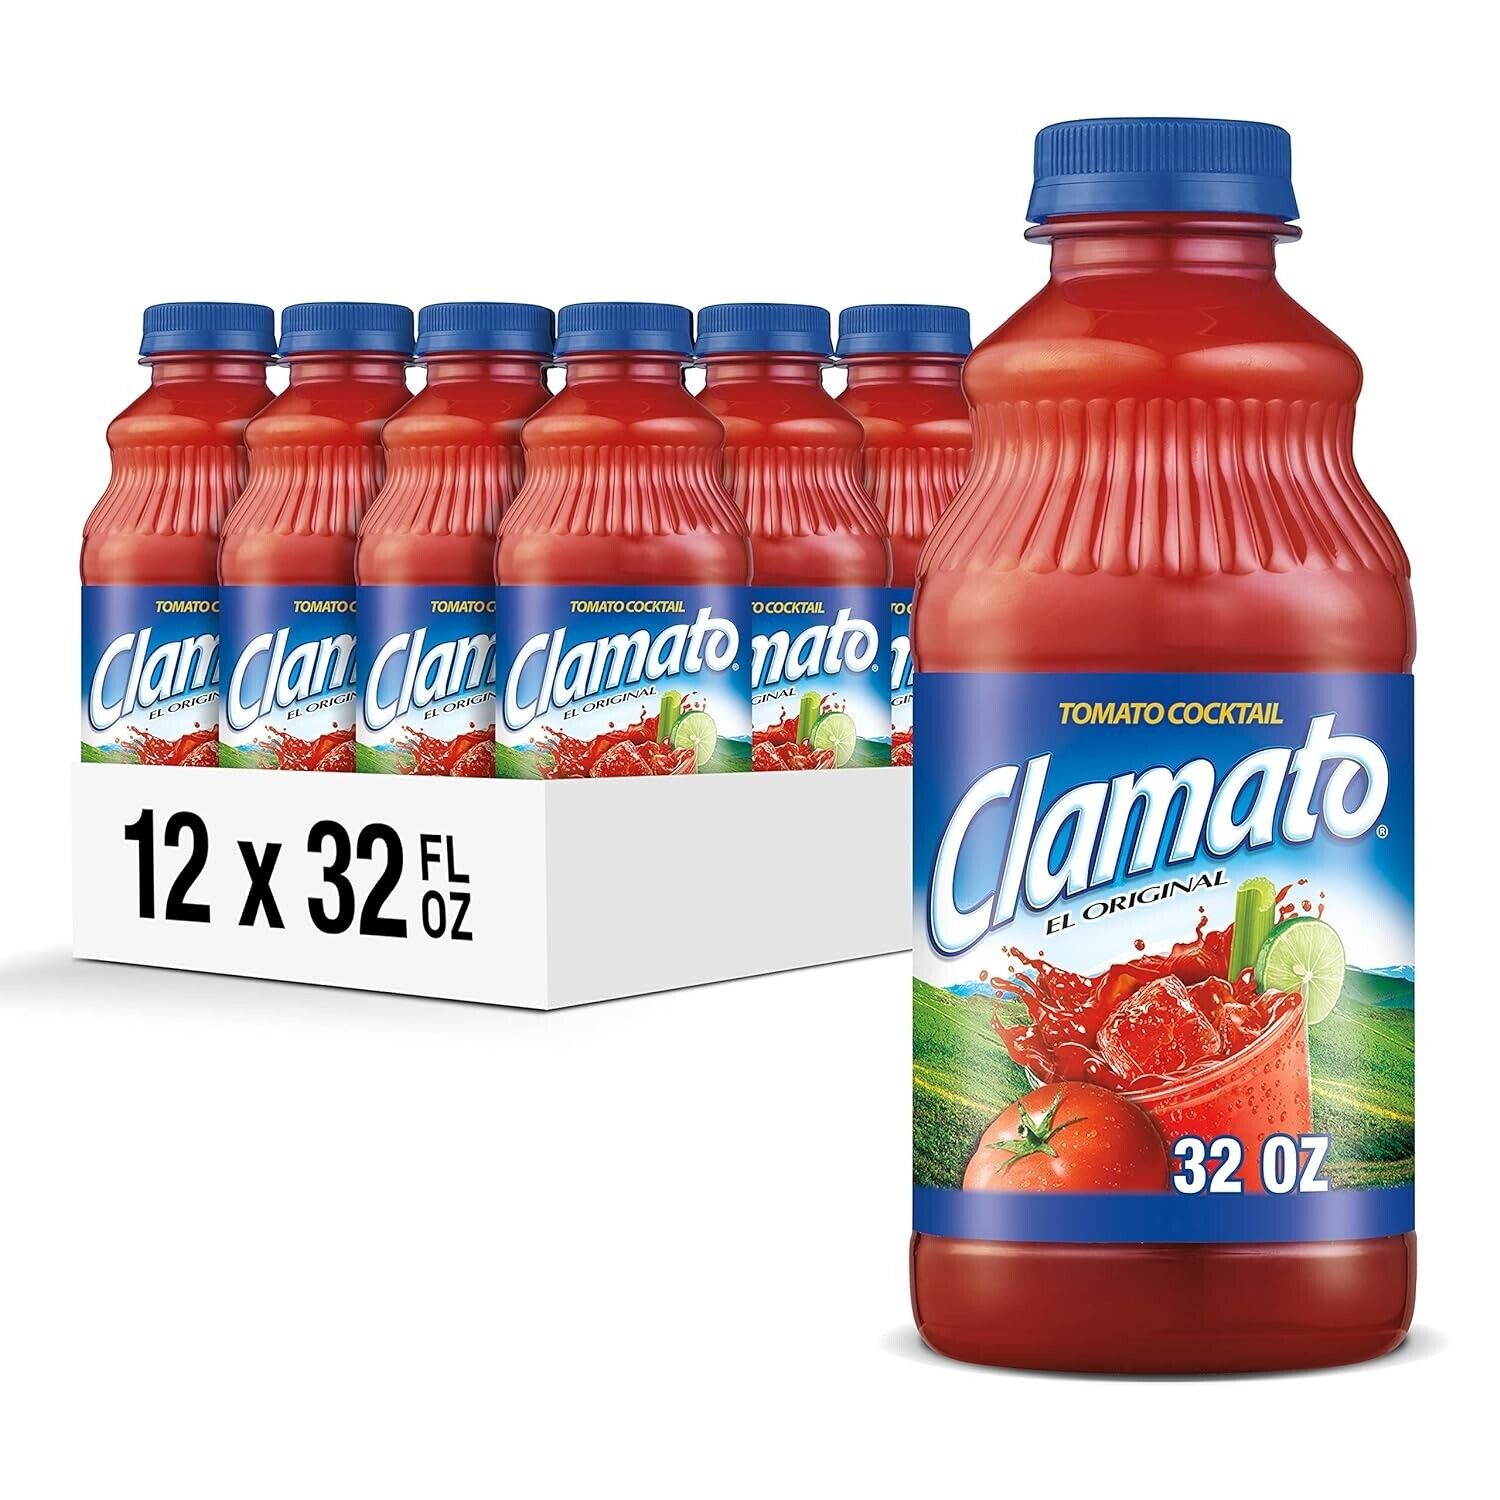 Clamato Original Tomato Cocktail, 32 fl oz bottle (Pack of 12)